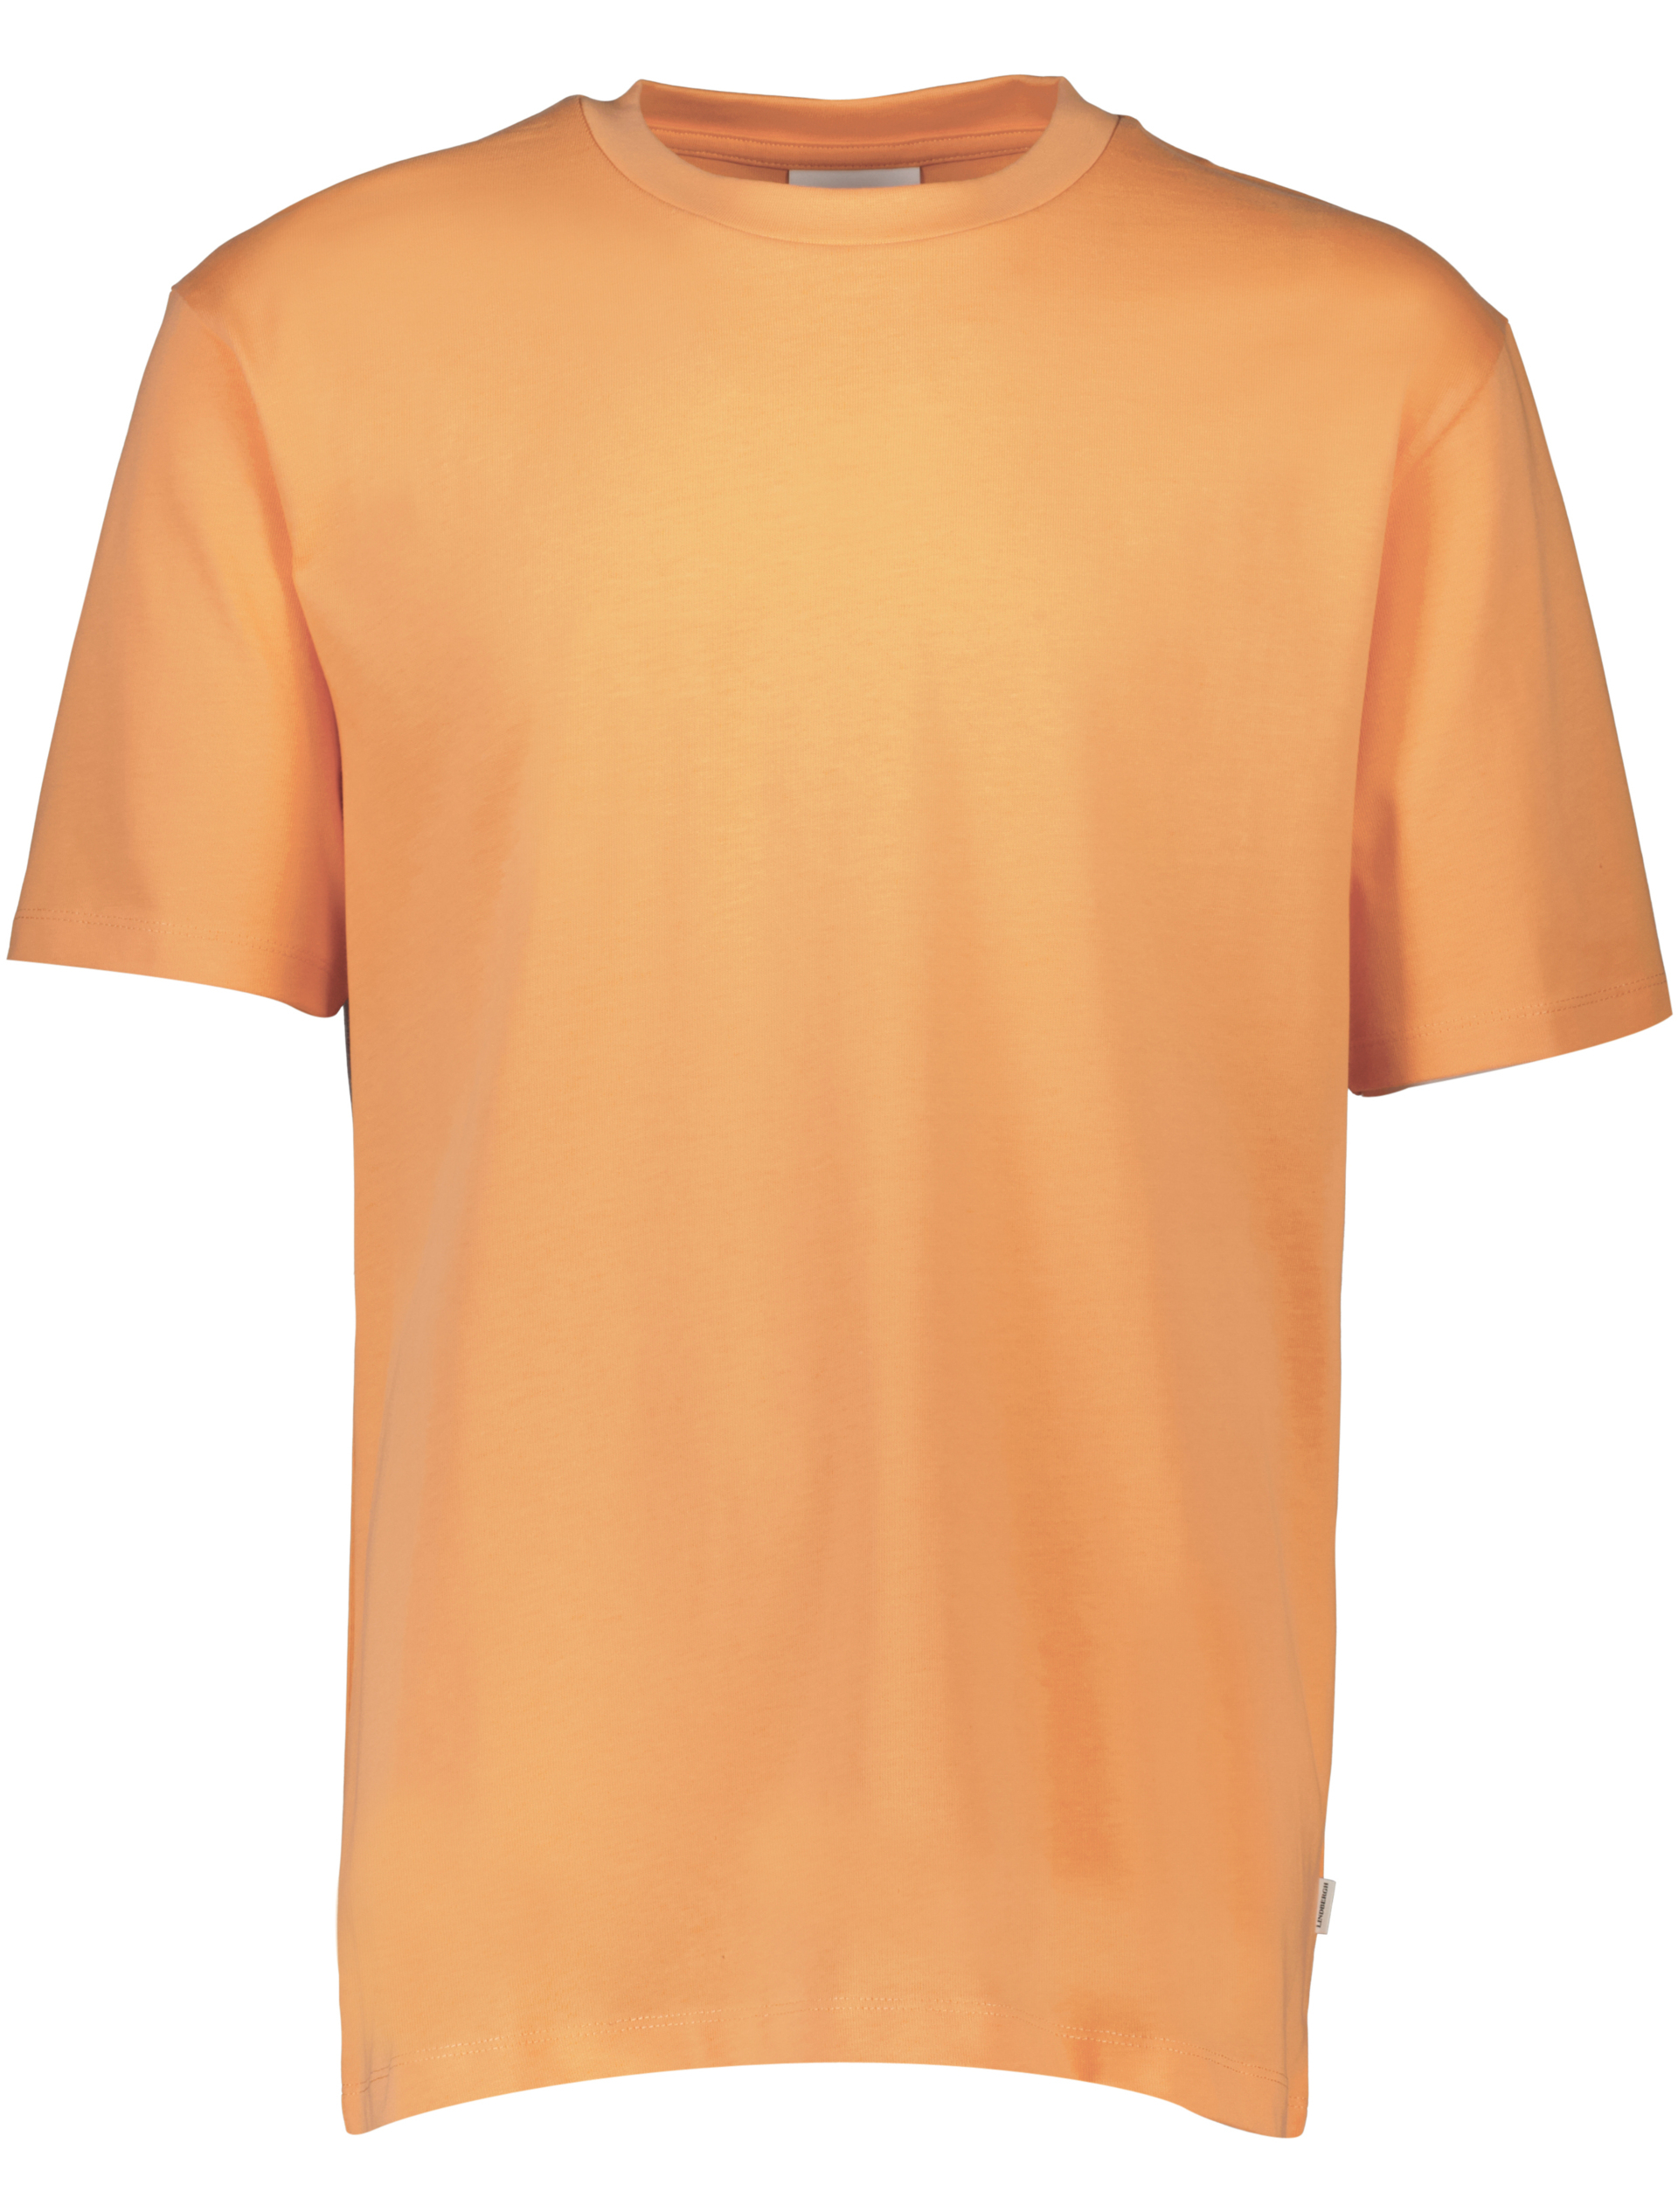 Lindbergh T-shirt orange / orange